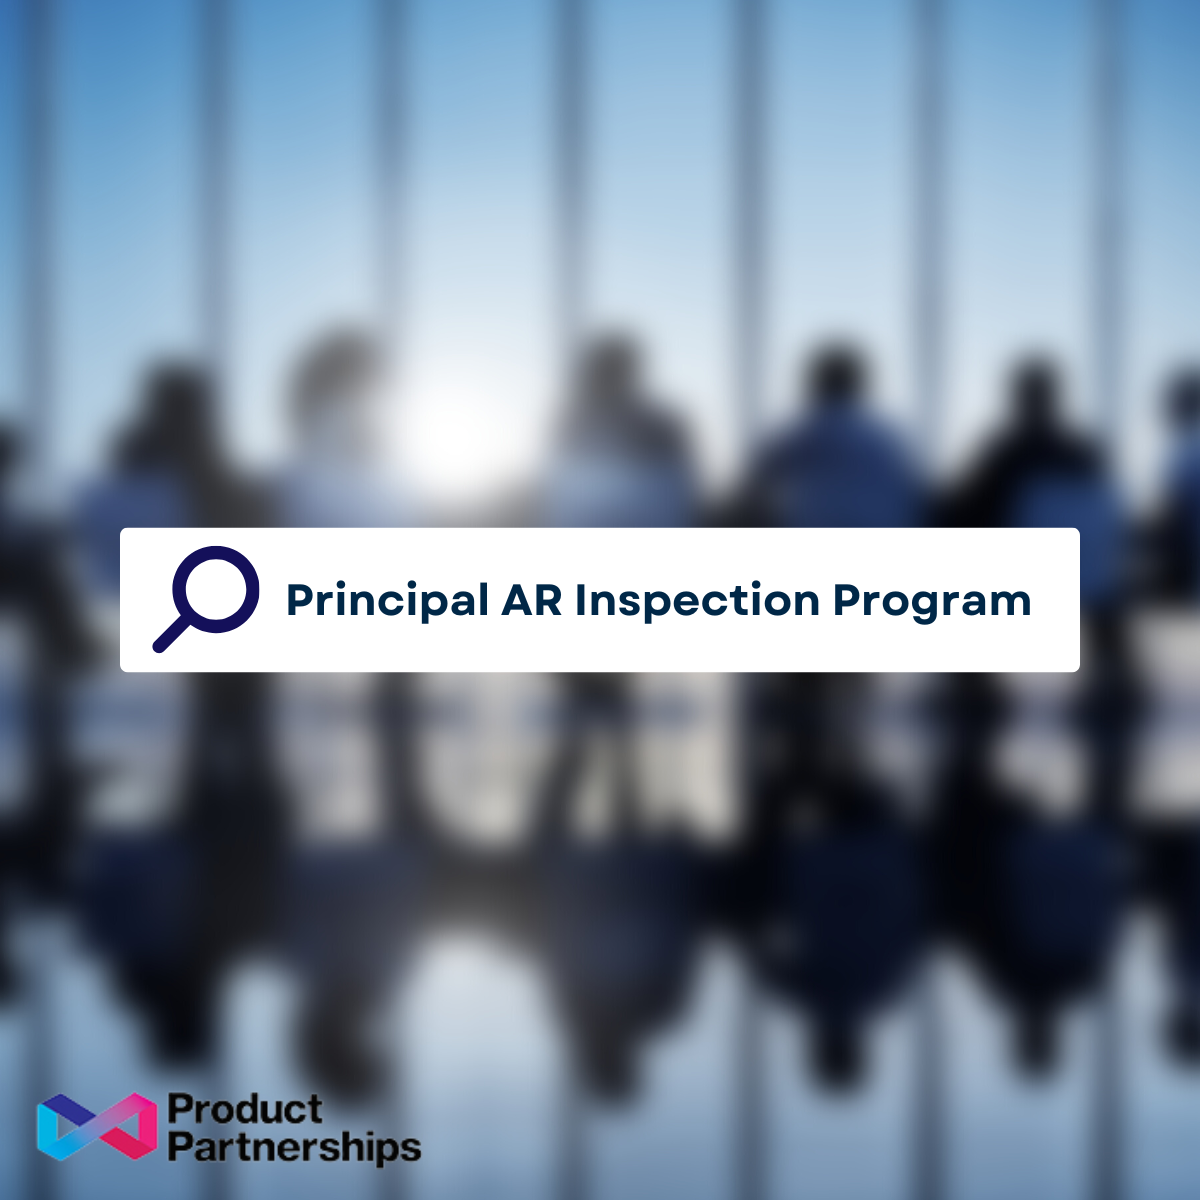 Our new Principal AR Inspection Program